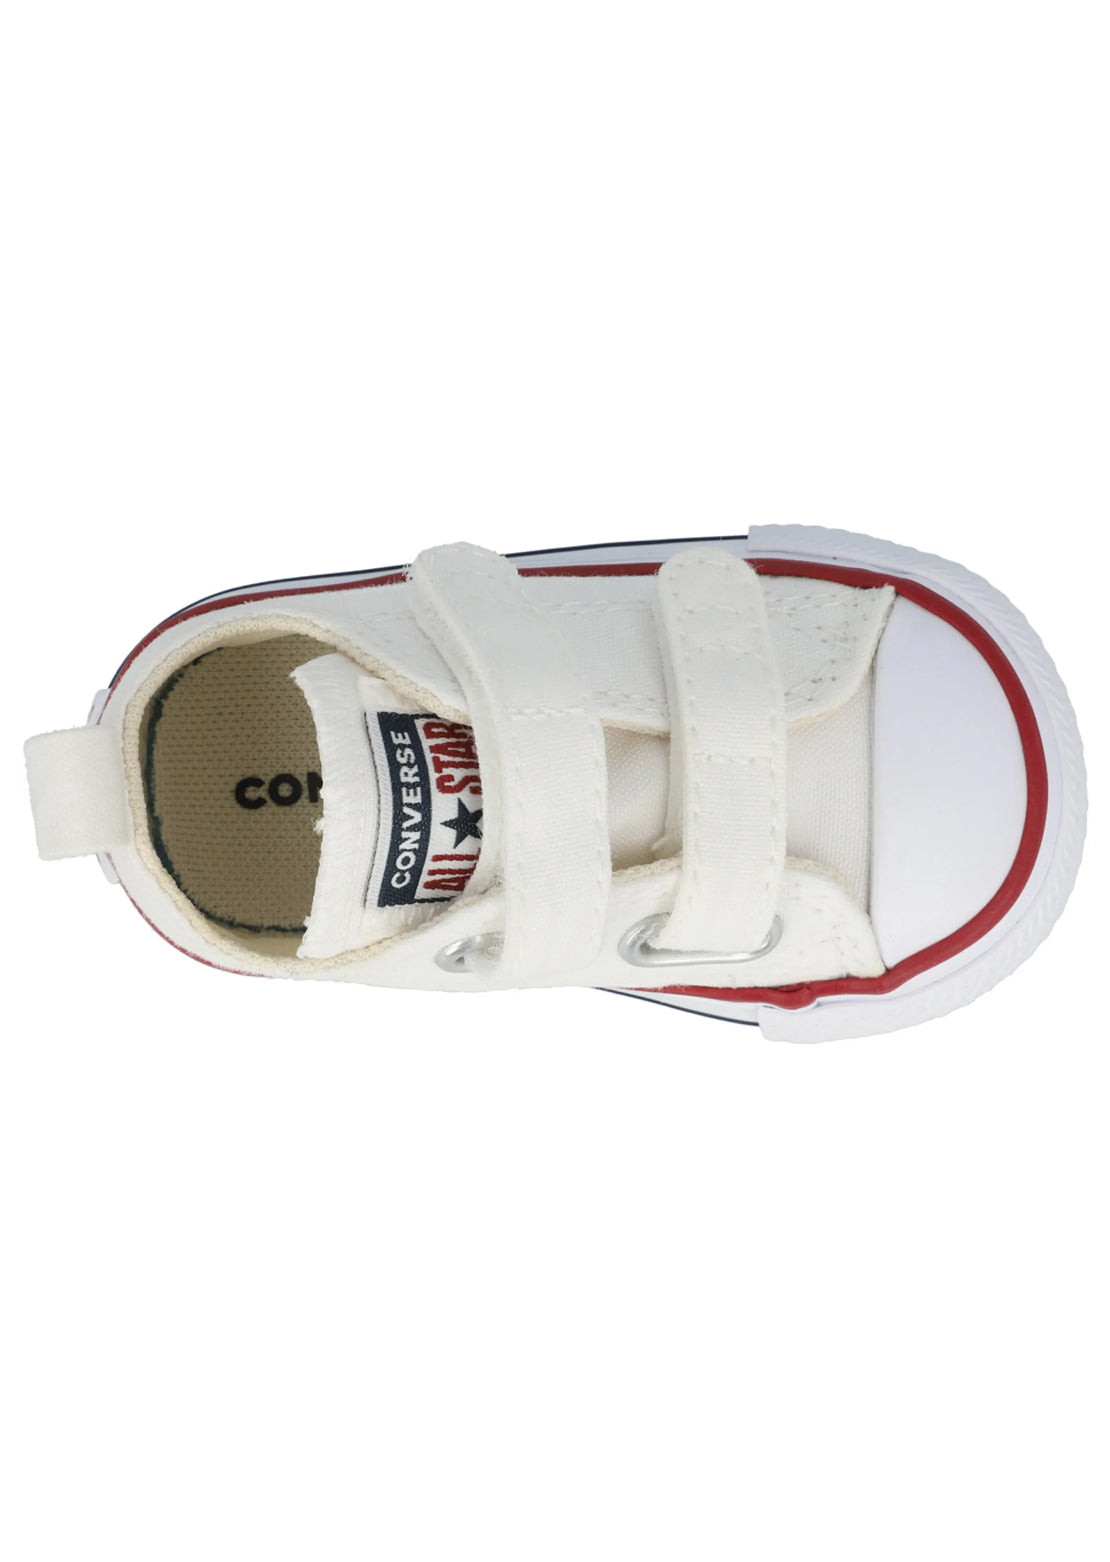 Converse Toddler Chuck Taylor All Star 2V OX Shoes White/Garnet/Navy 769029C